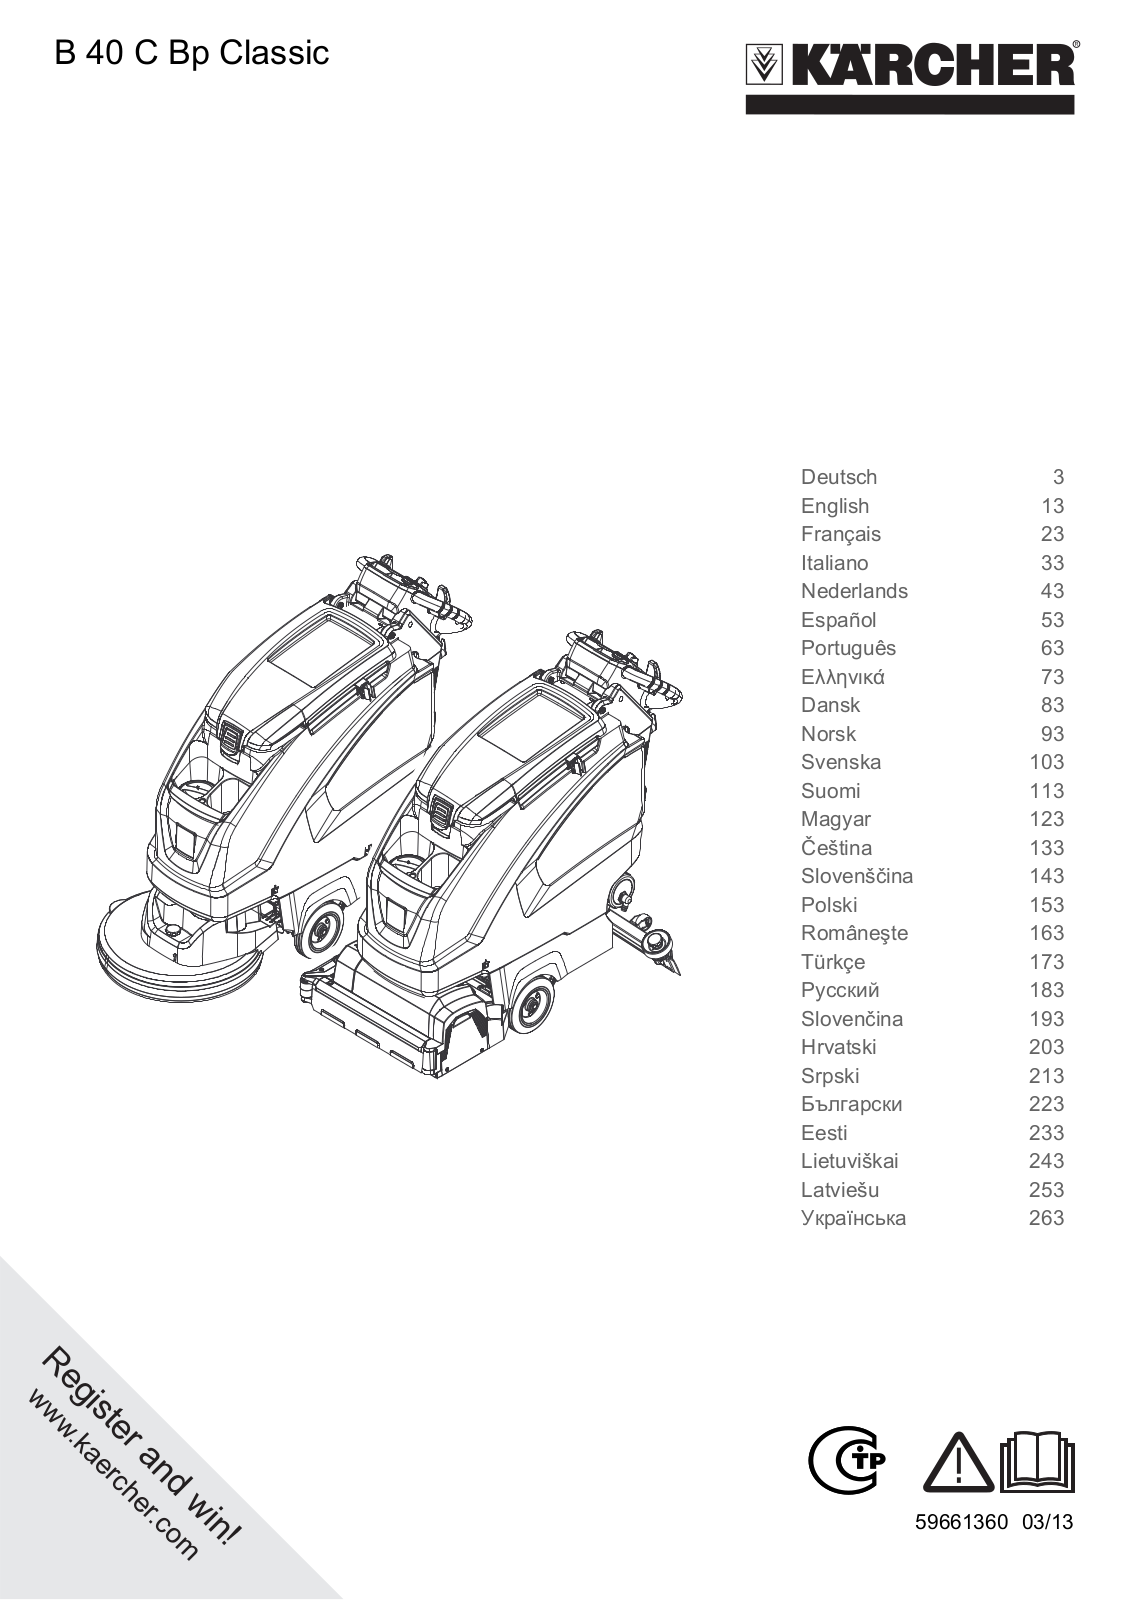 Karcher B 40 C Classic Bp R45 User Manual